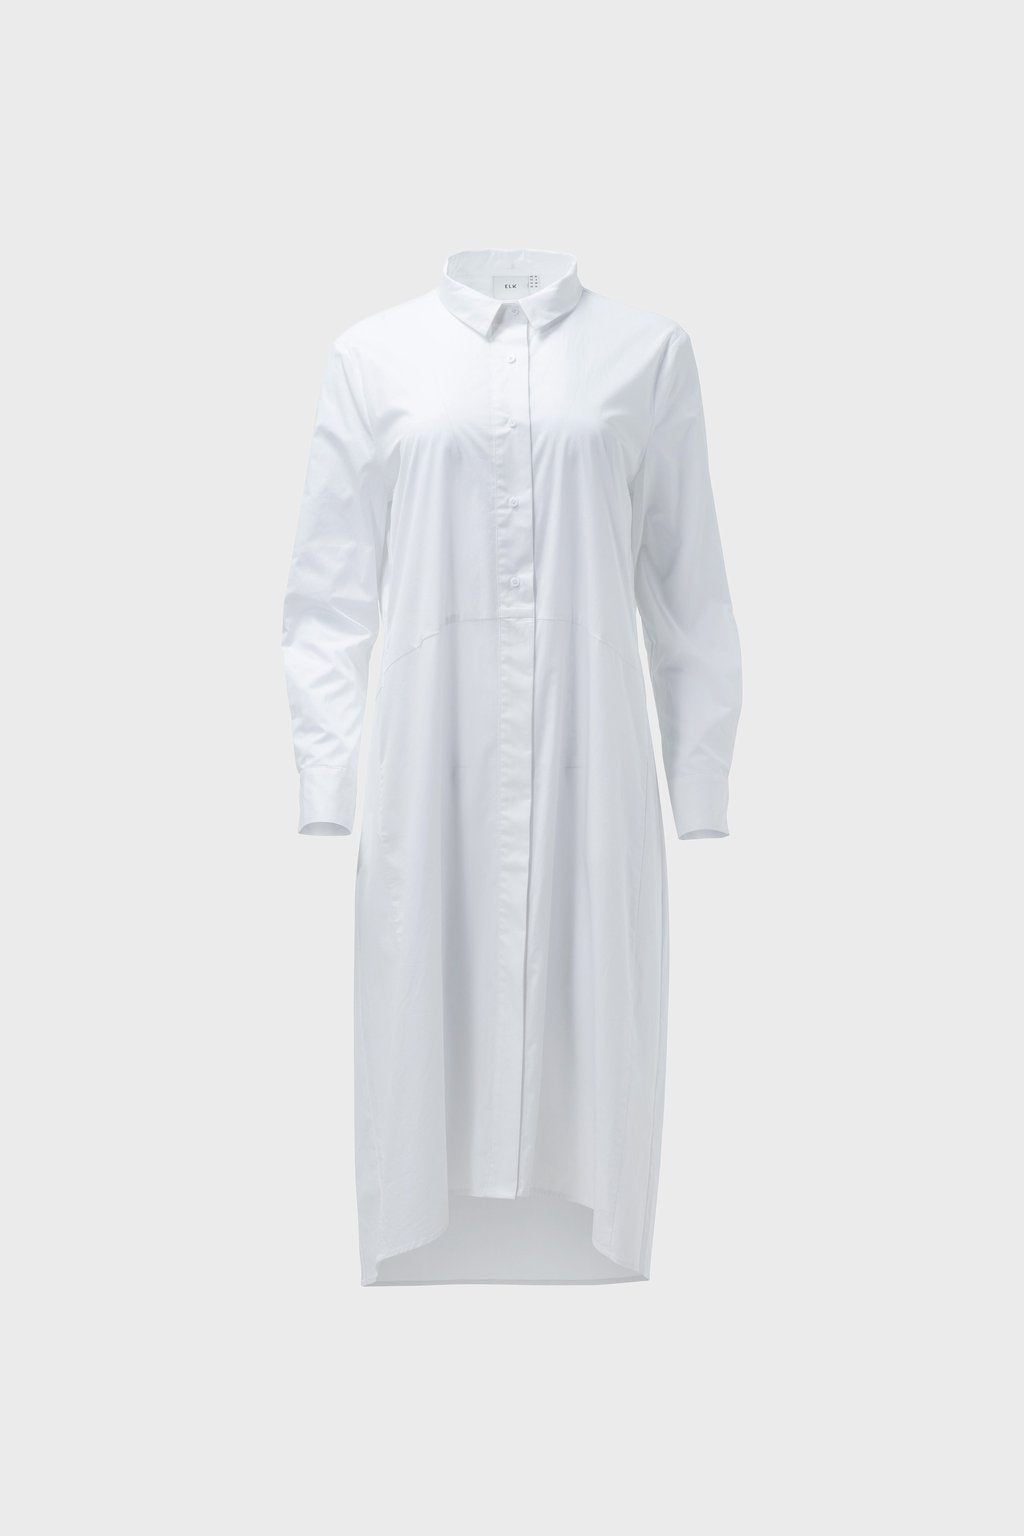 ELK THE LABEL Dania Shirt Dress | White